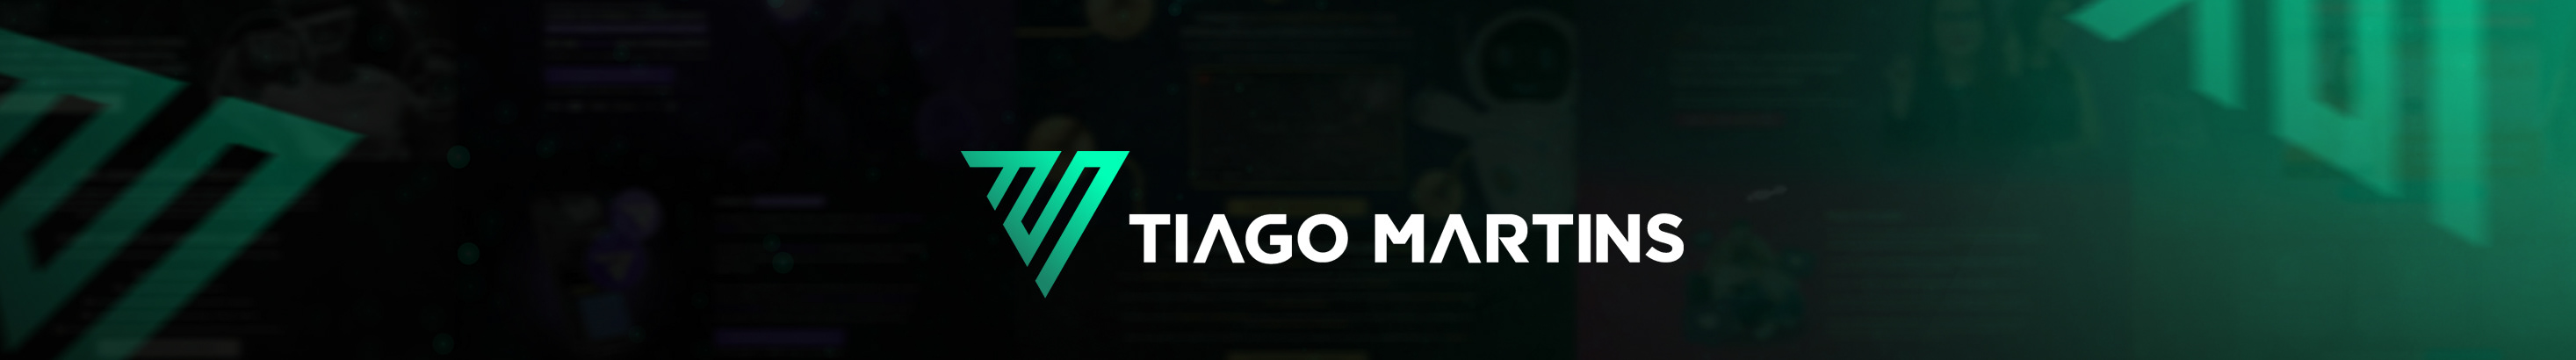 Tiago Martins's profile banner